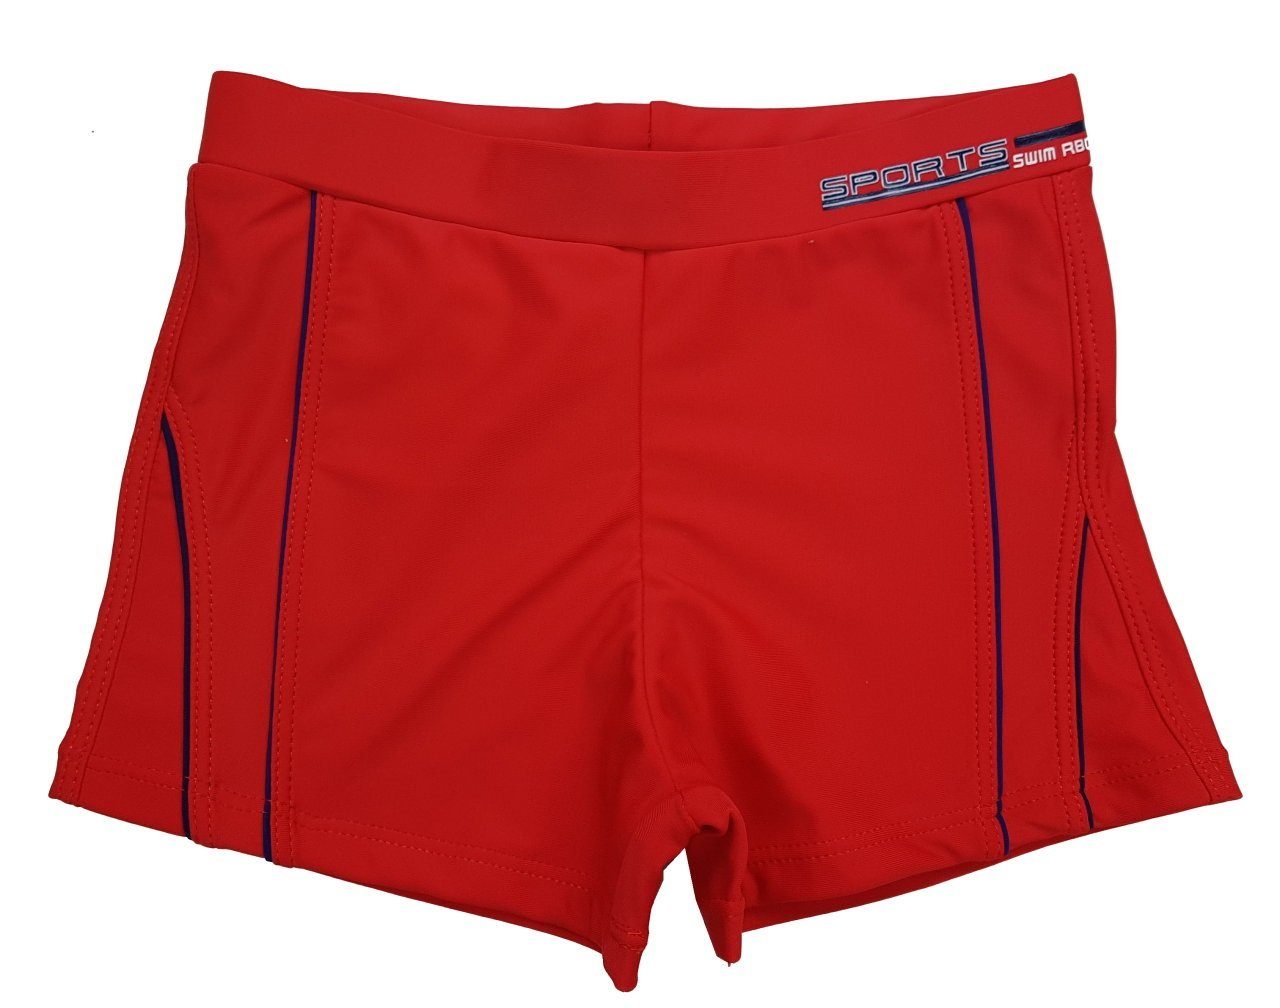 Badehose, Jungen Boxer-Badehose Fashion Badeshorts, Rot Boy P576 Schwimmshorts,